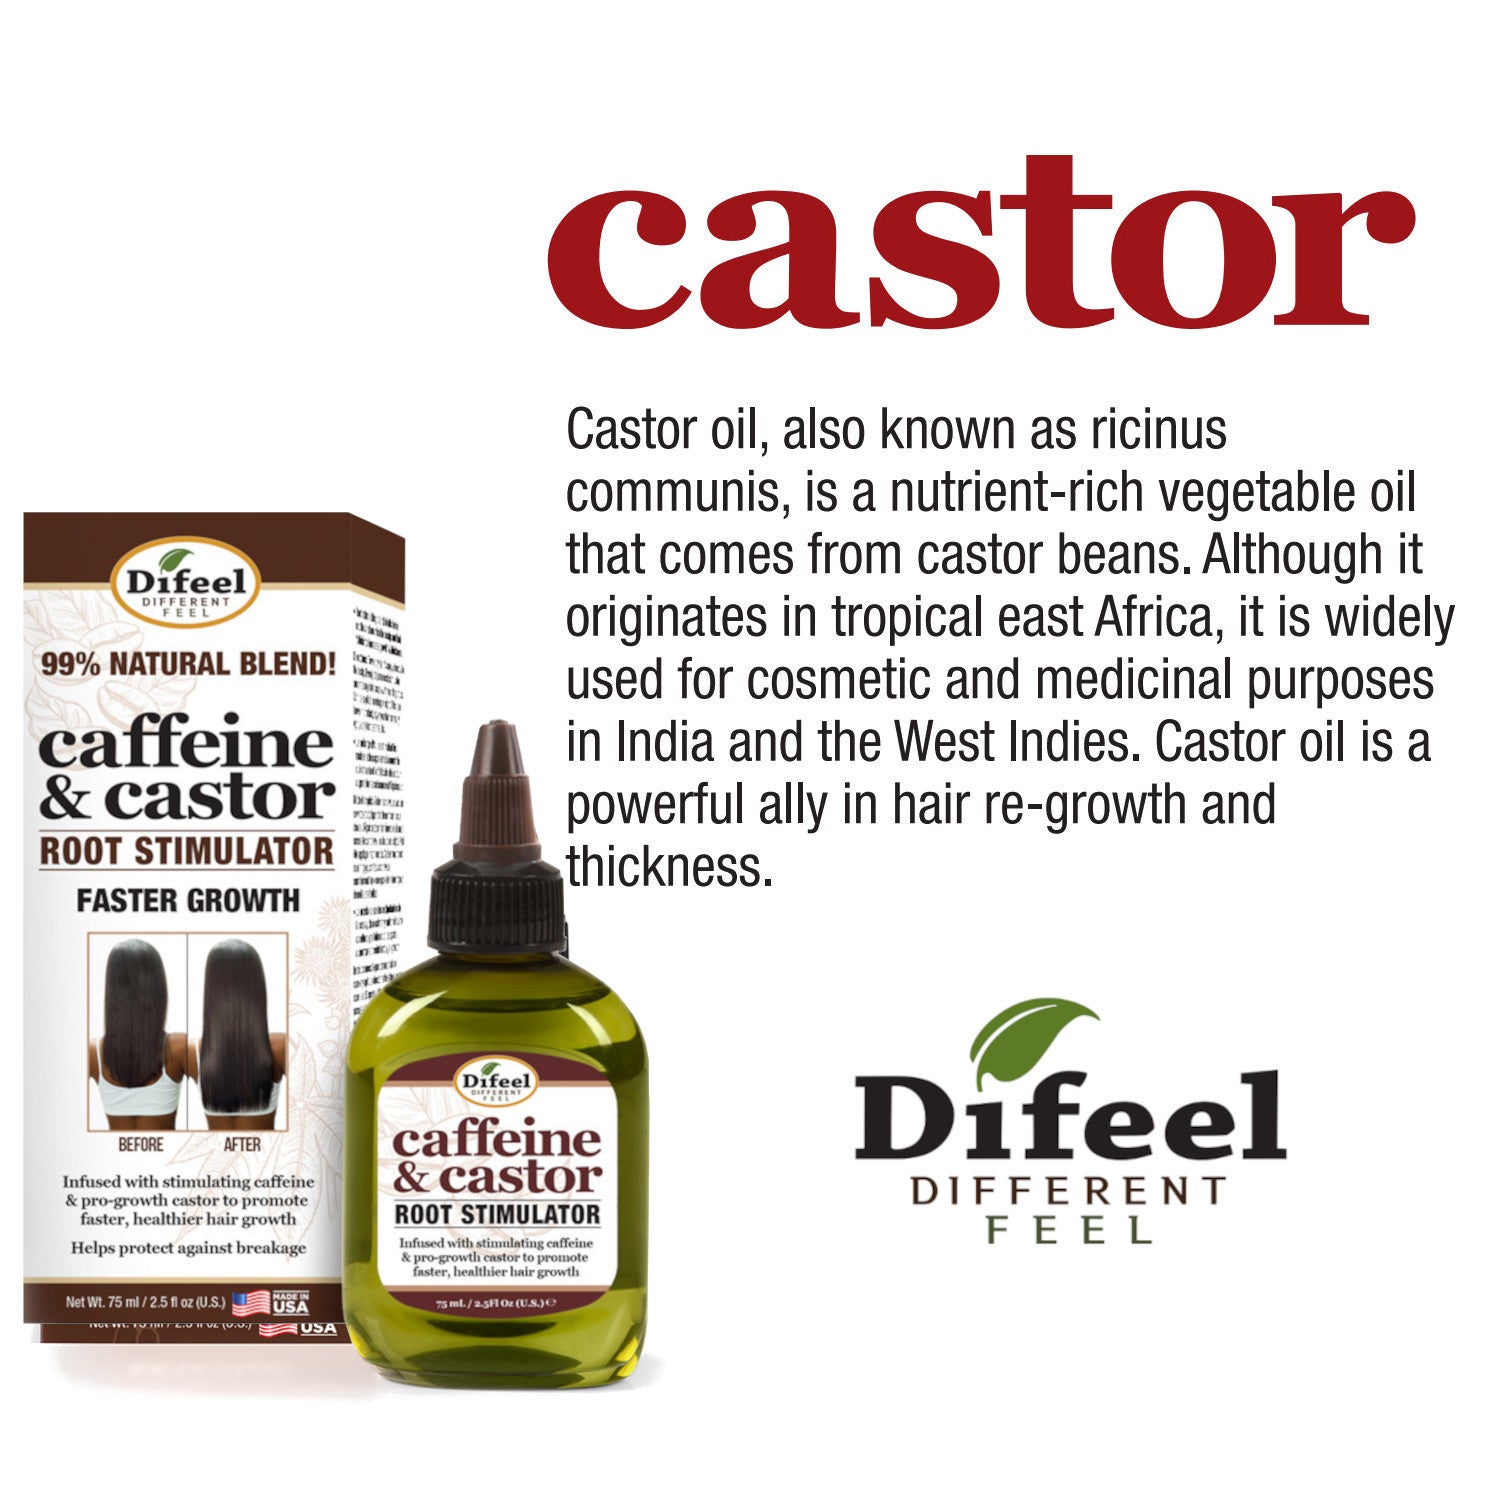 Difeel Caffeine & Castor Root Stimulator for Faster Hair Growth 2.5 oz.